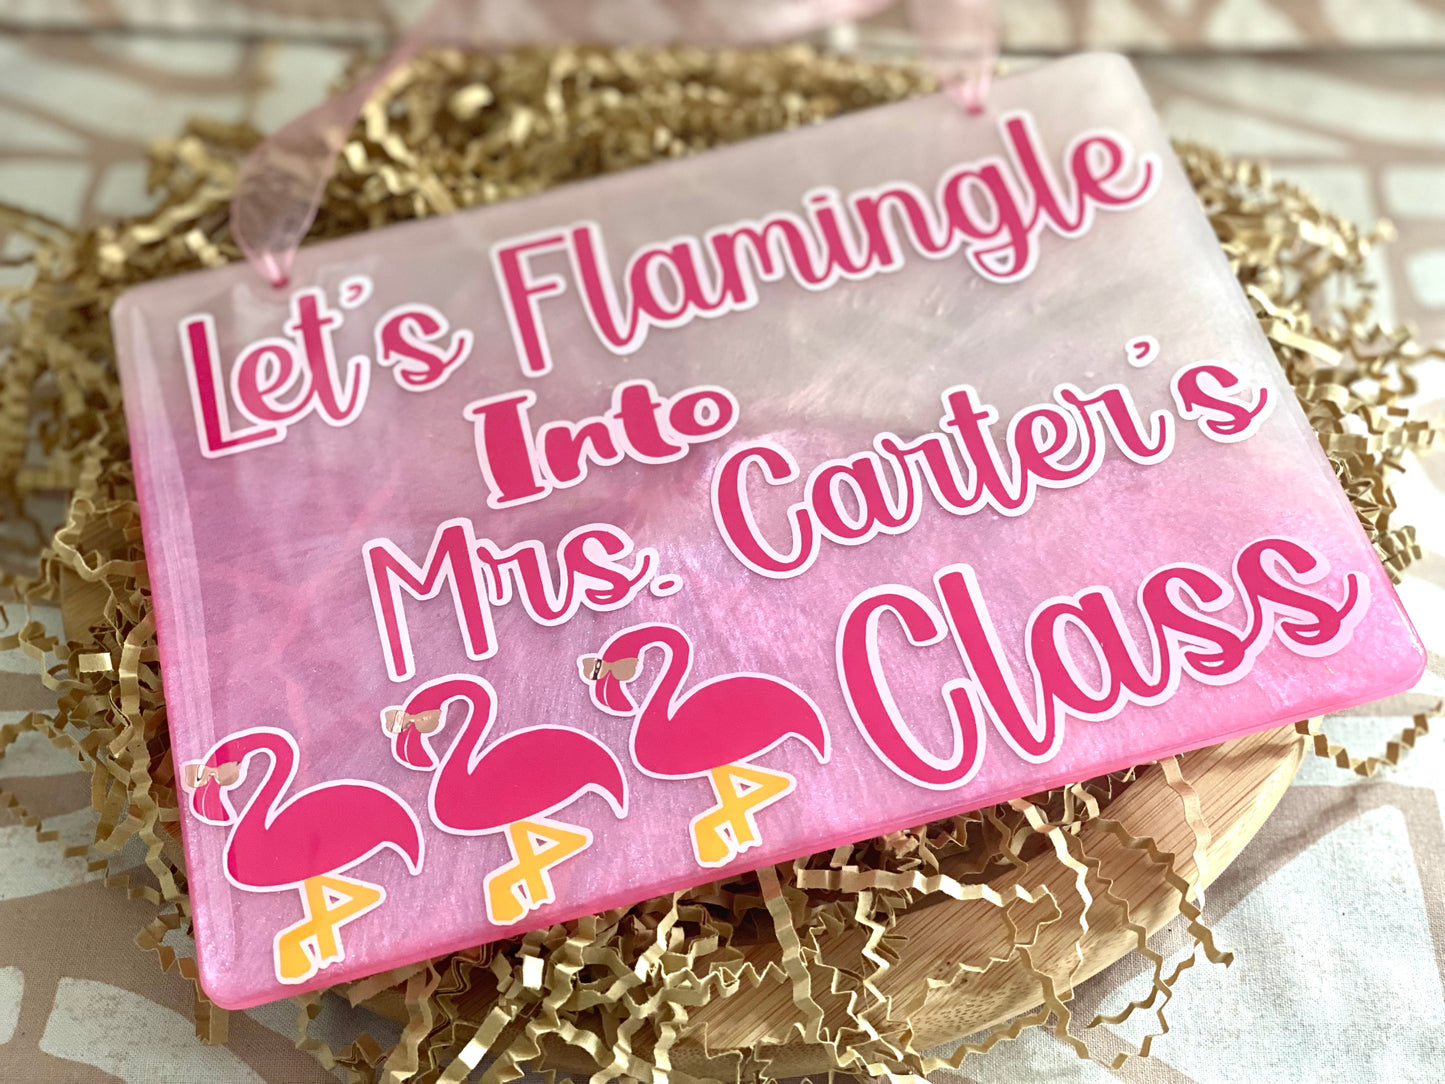 Let’s Flamingle Teacher Classroom Signs